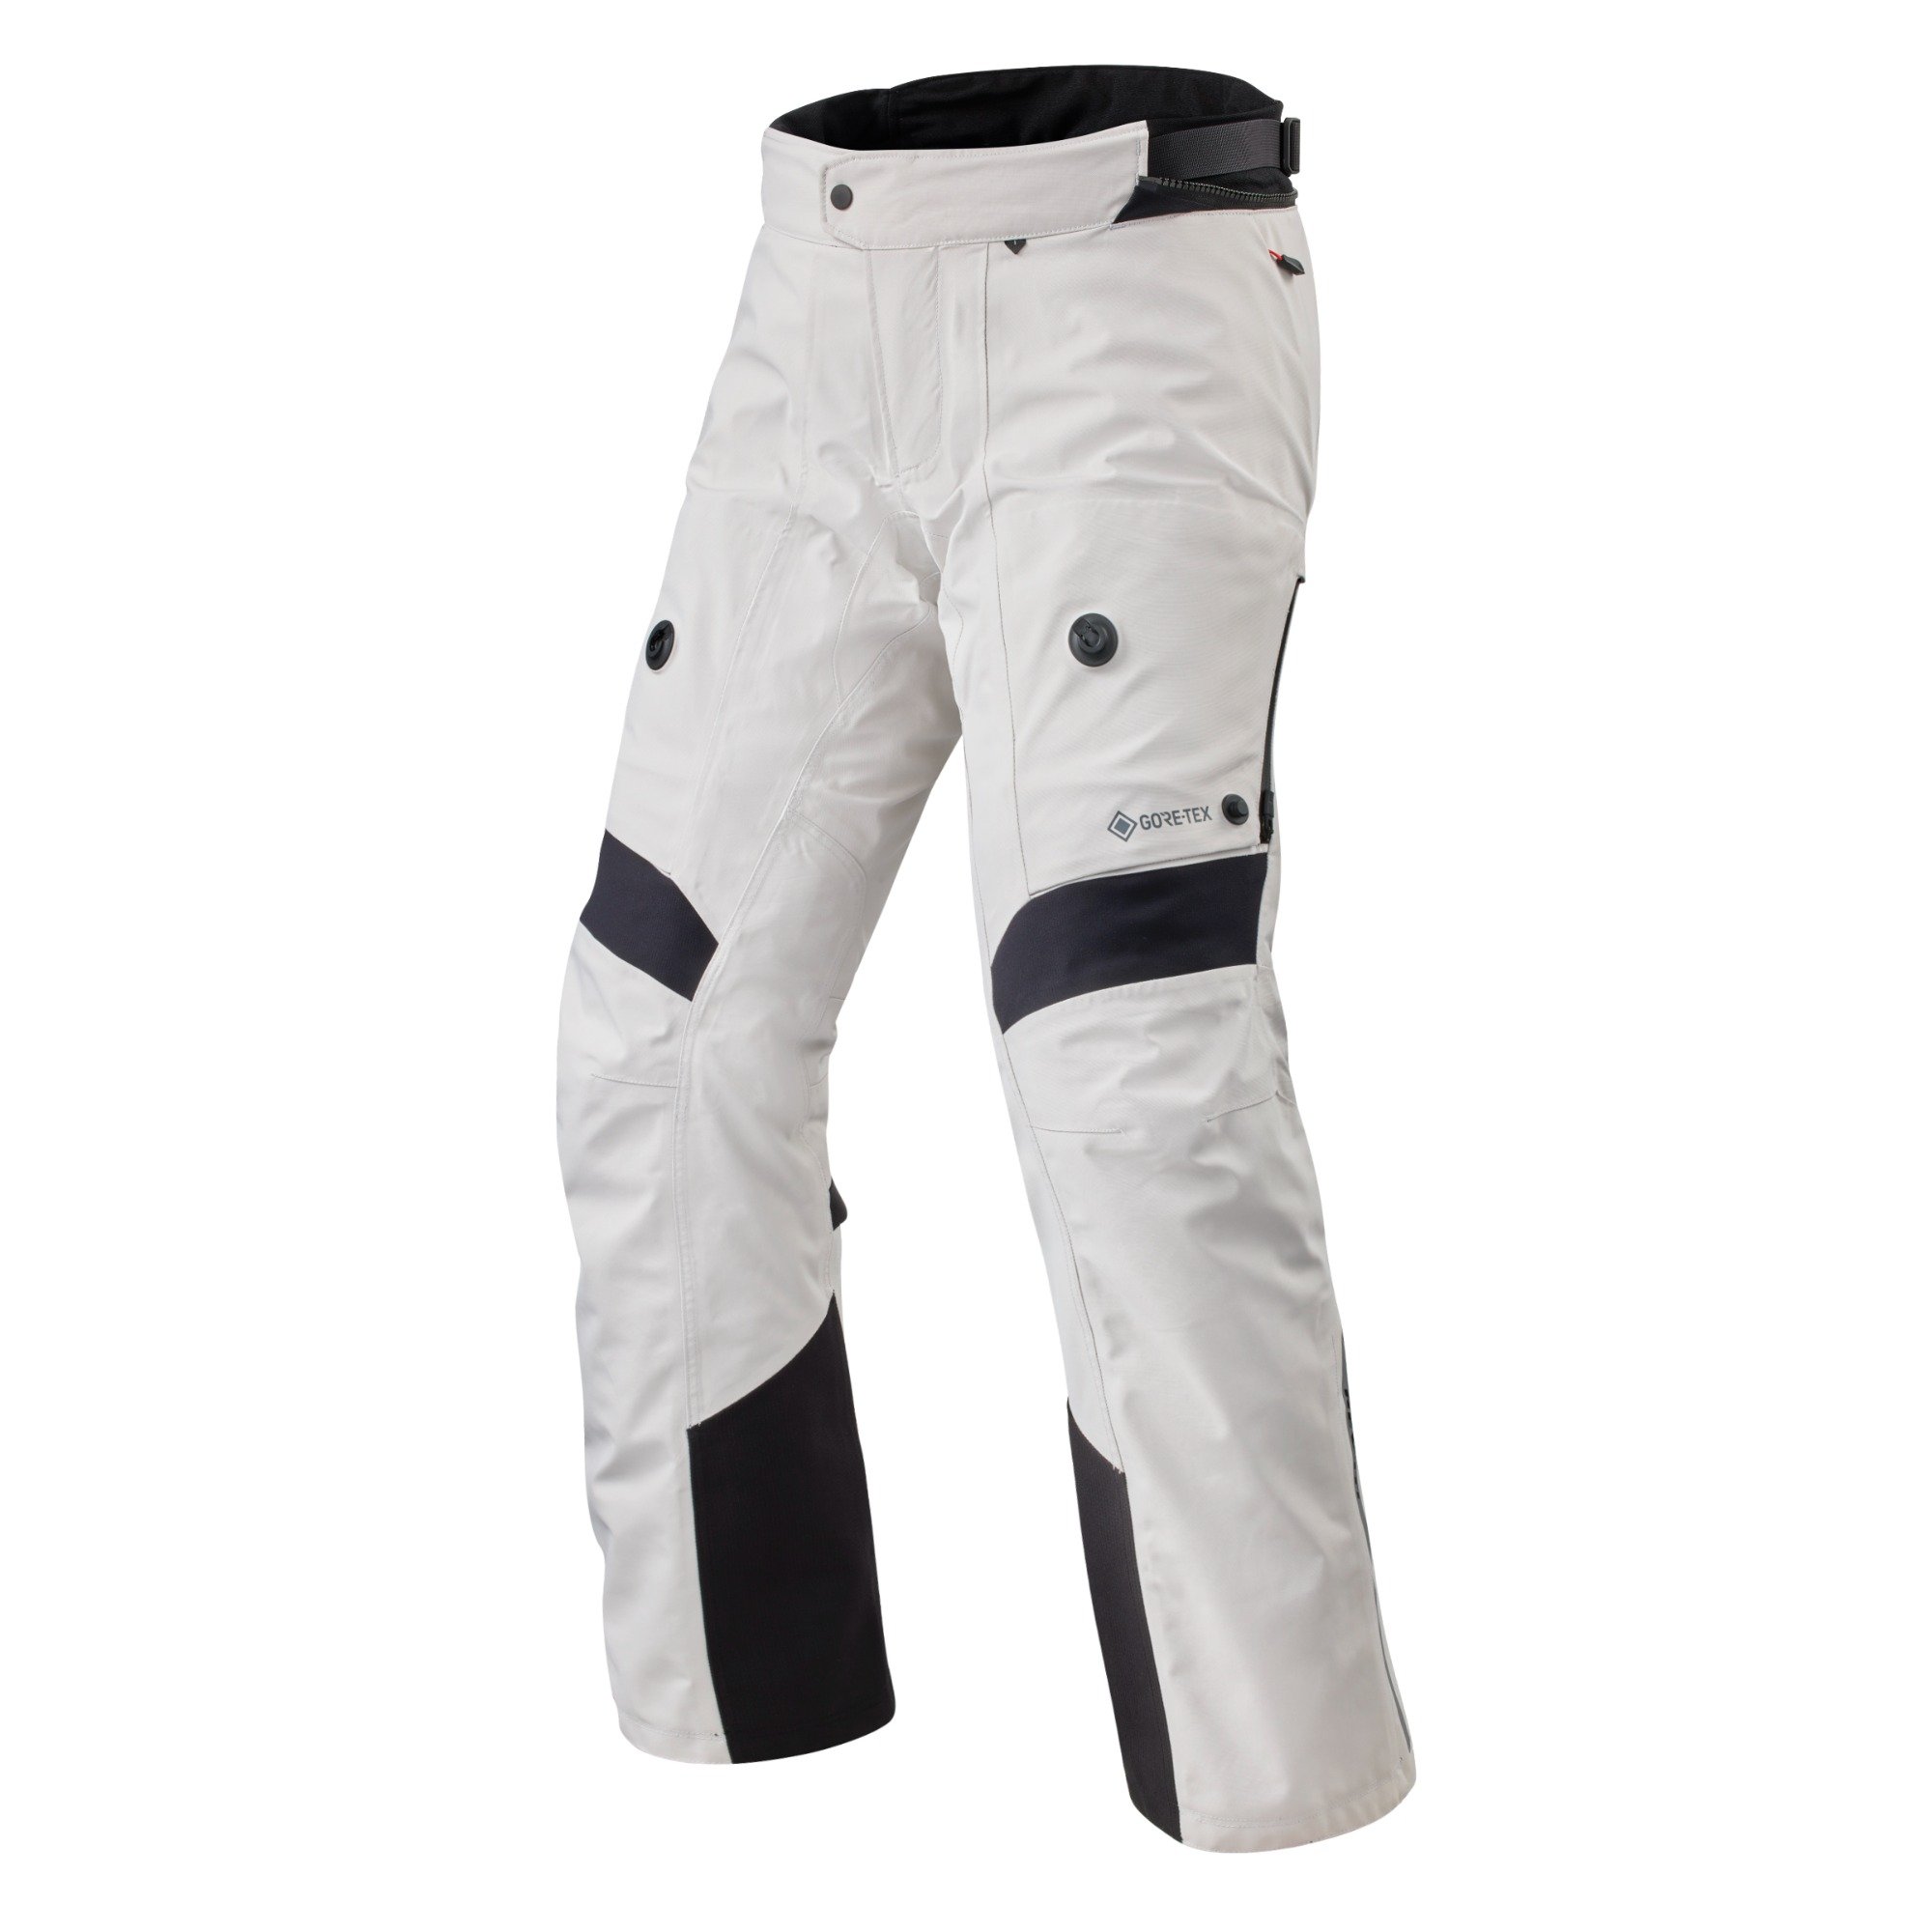 Image of REV'IT! Pants Poseidon 3 GTX Silver Black Standard Motorcycle Pants Talla L